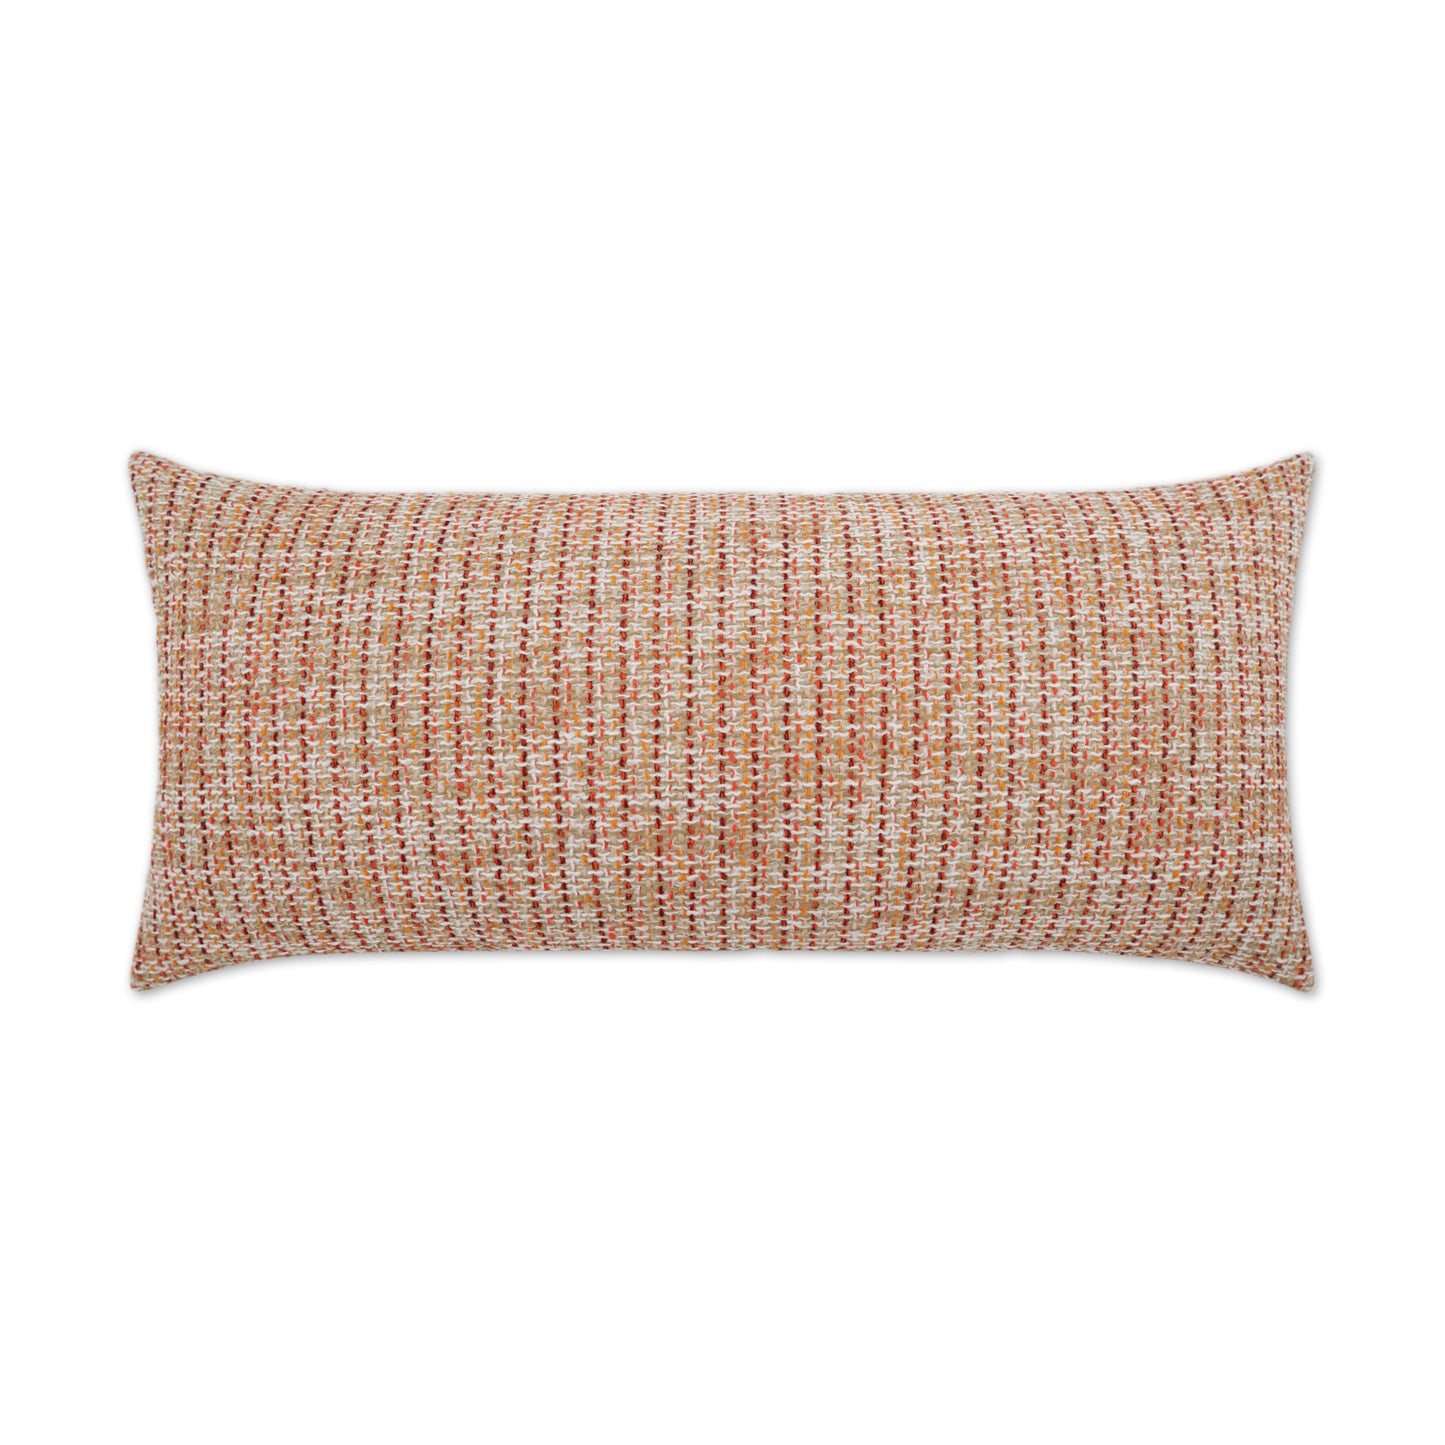 Outdoor Particle Lumbar Pillow - Spice